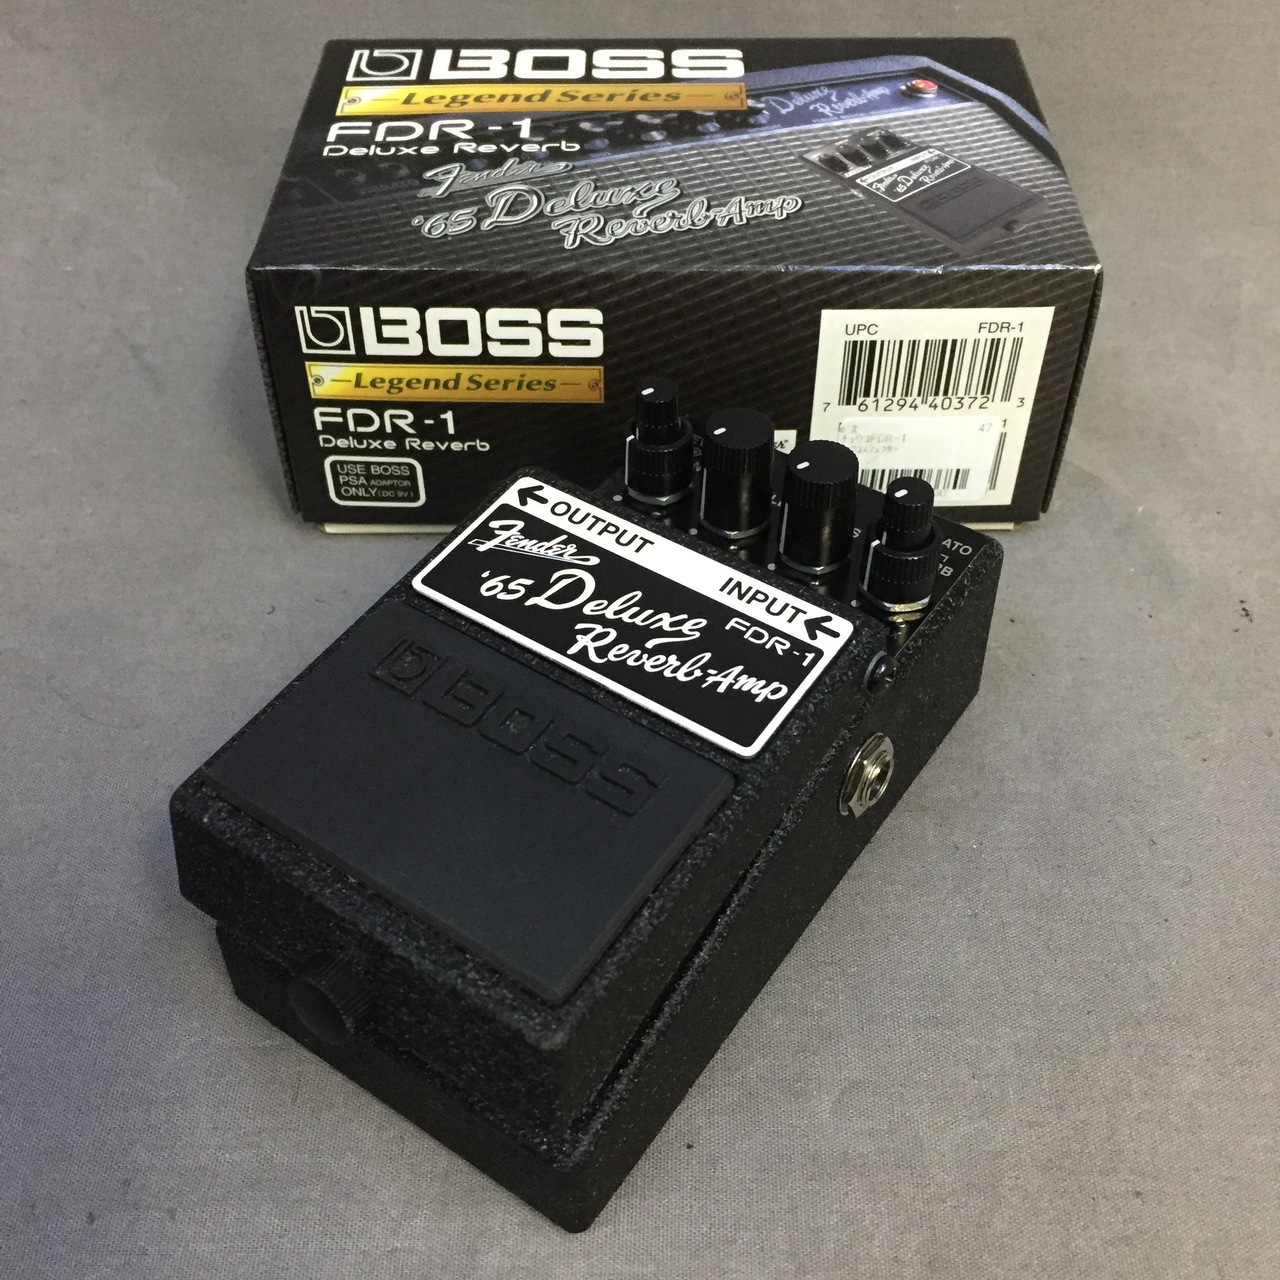 BOSS Legend Series FDR1 Deluxe Reverb